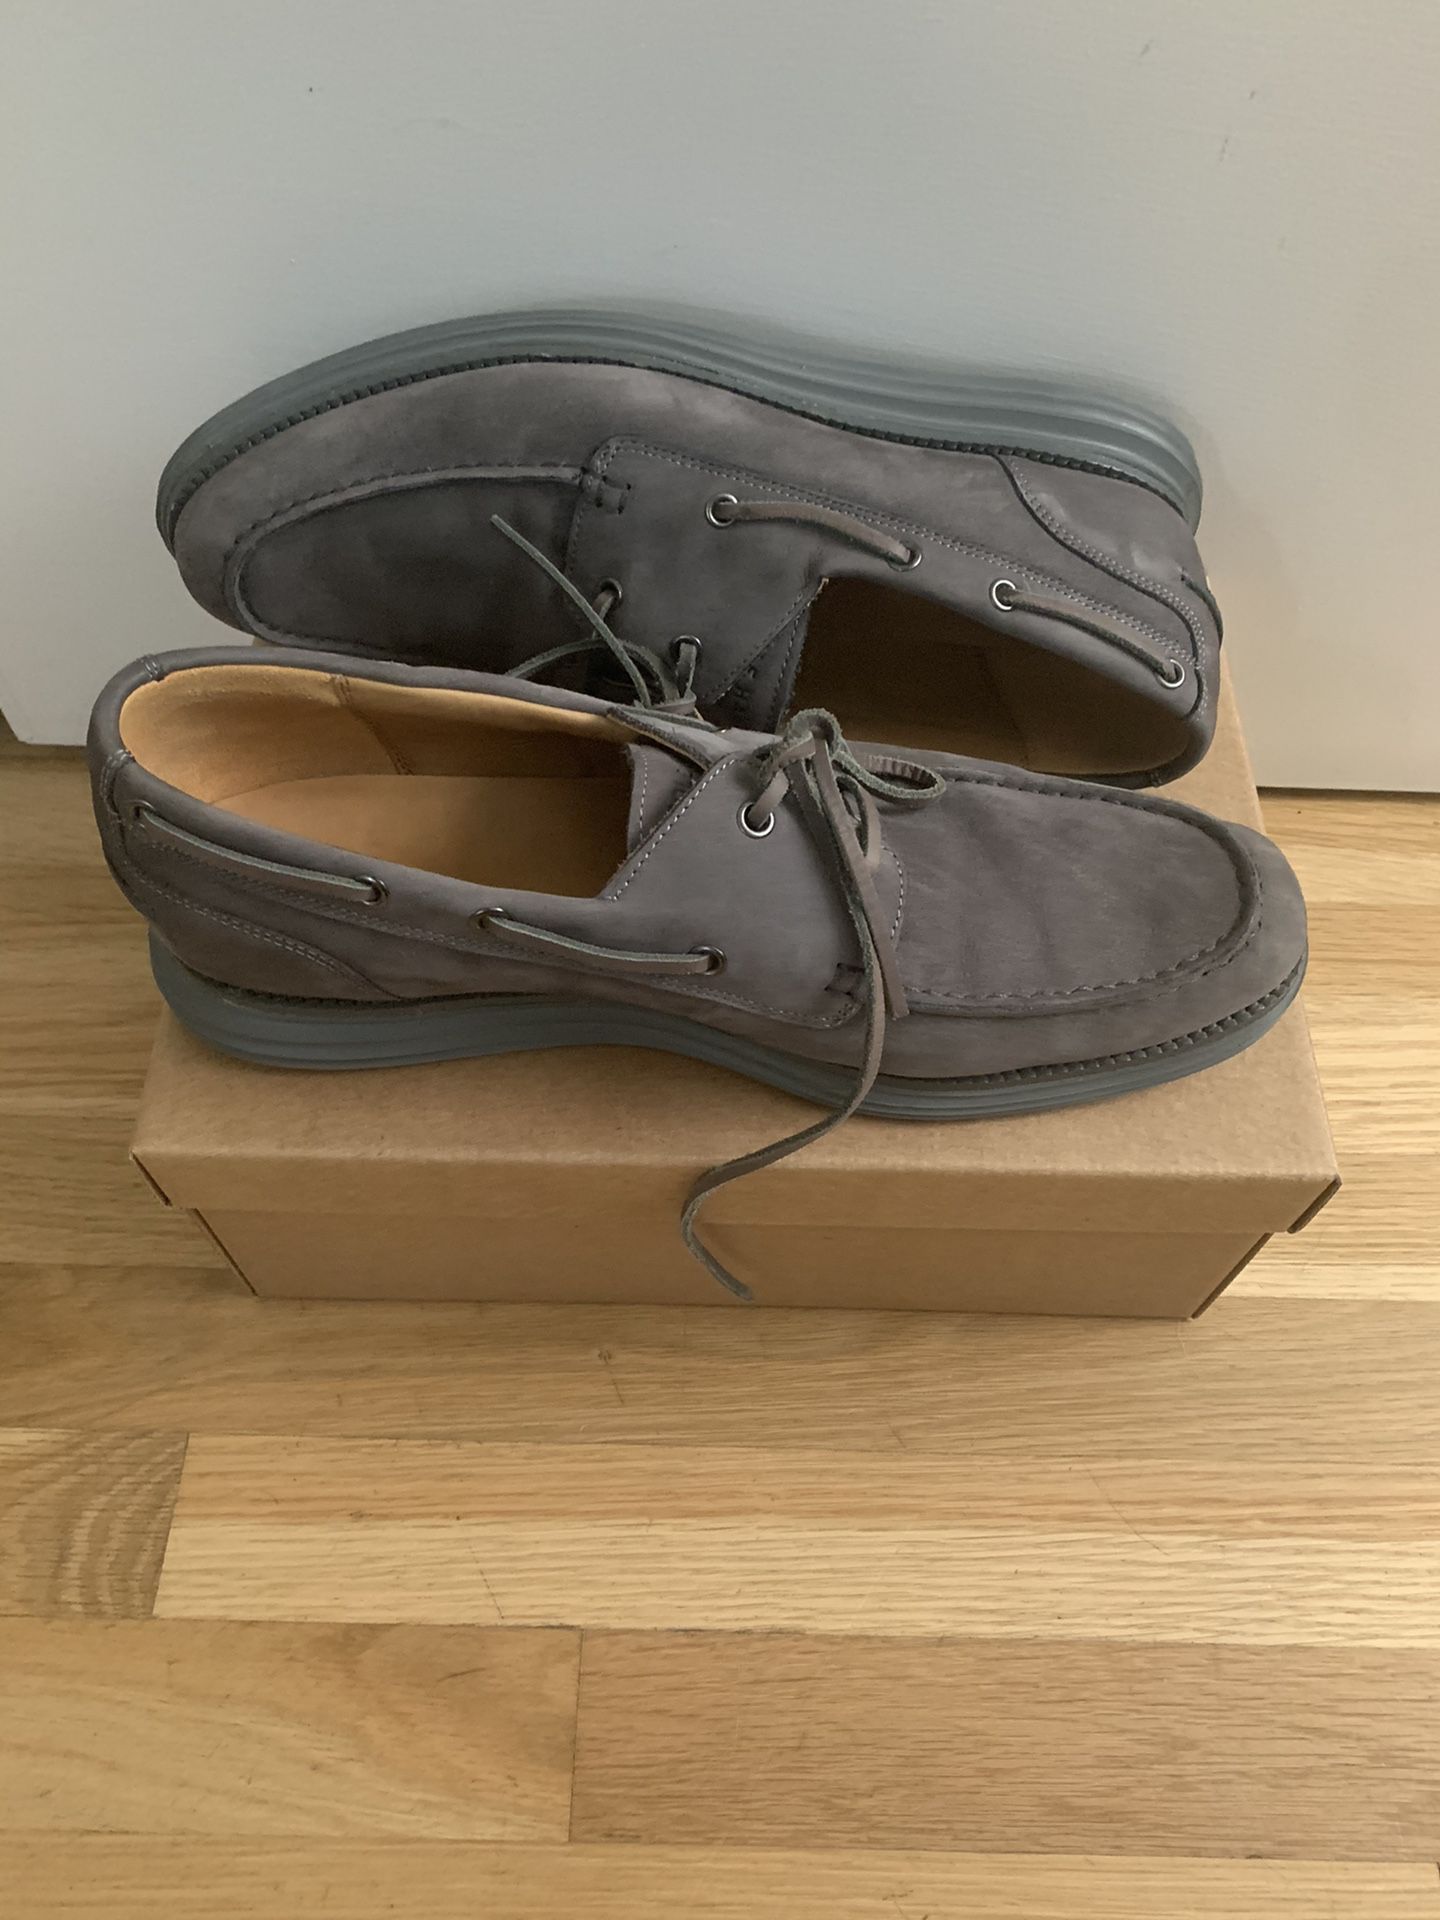 Cole Hann. Grey Boat Shoes. Size 13. Nike Lunar bottom. Low usage, like New.